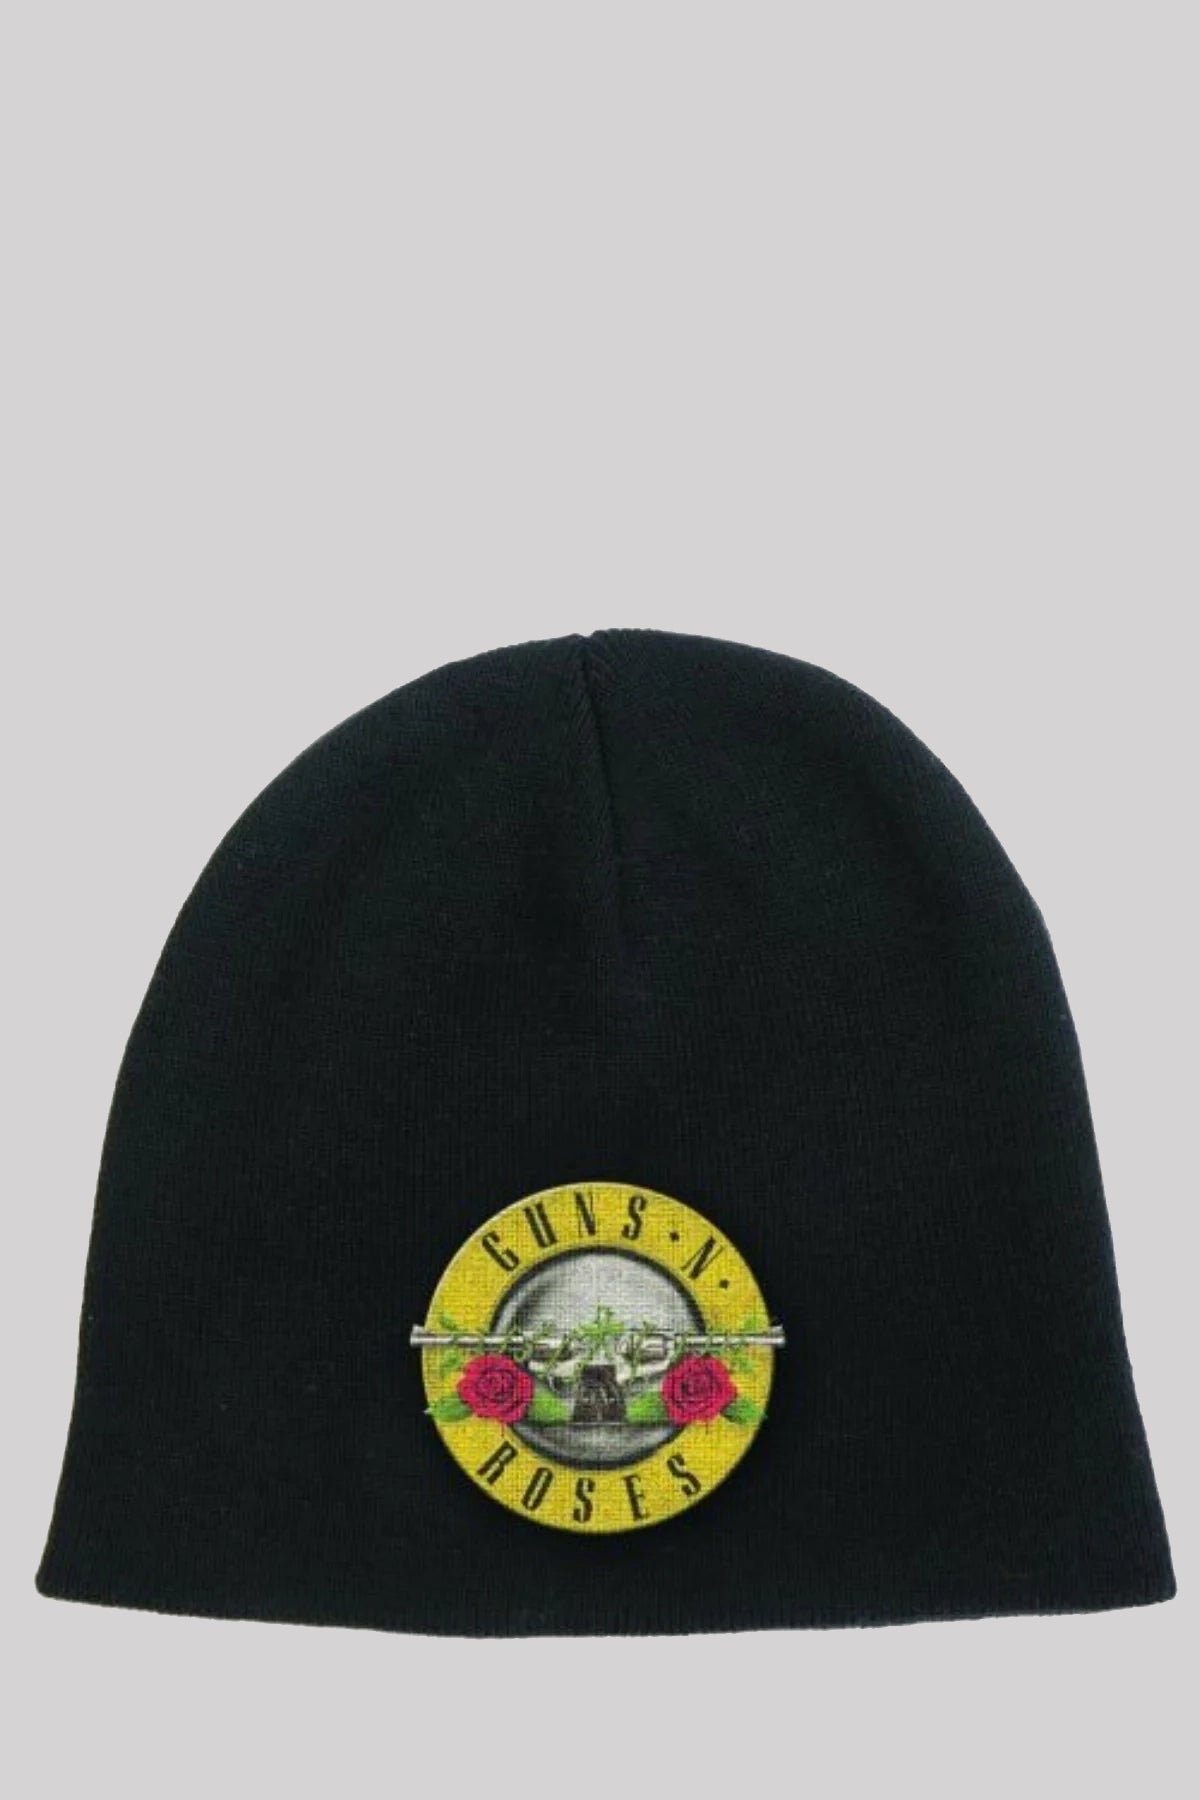 Guns N' Roses Unisex Beanie Hat: Logo Official Merchandise